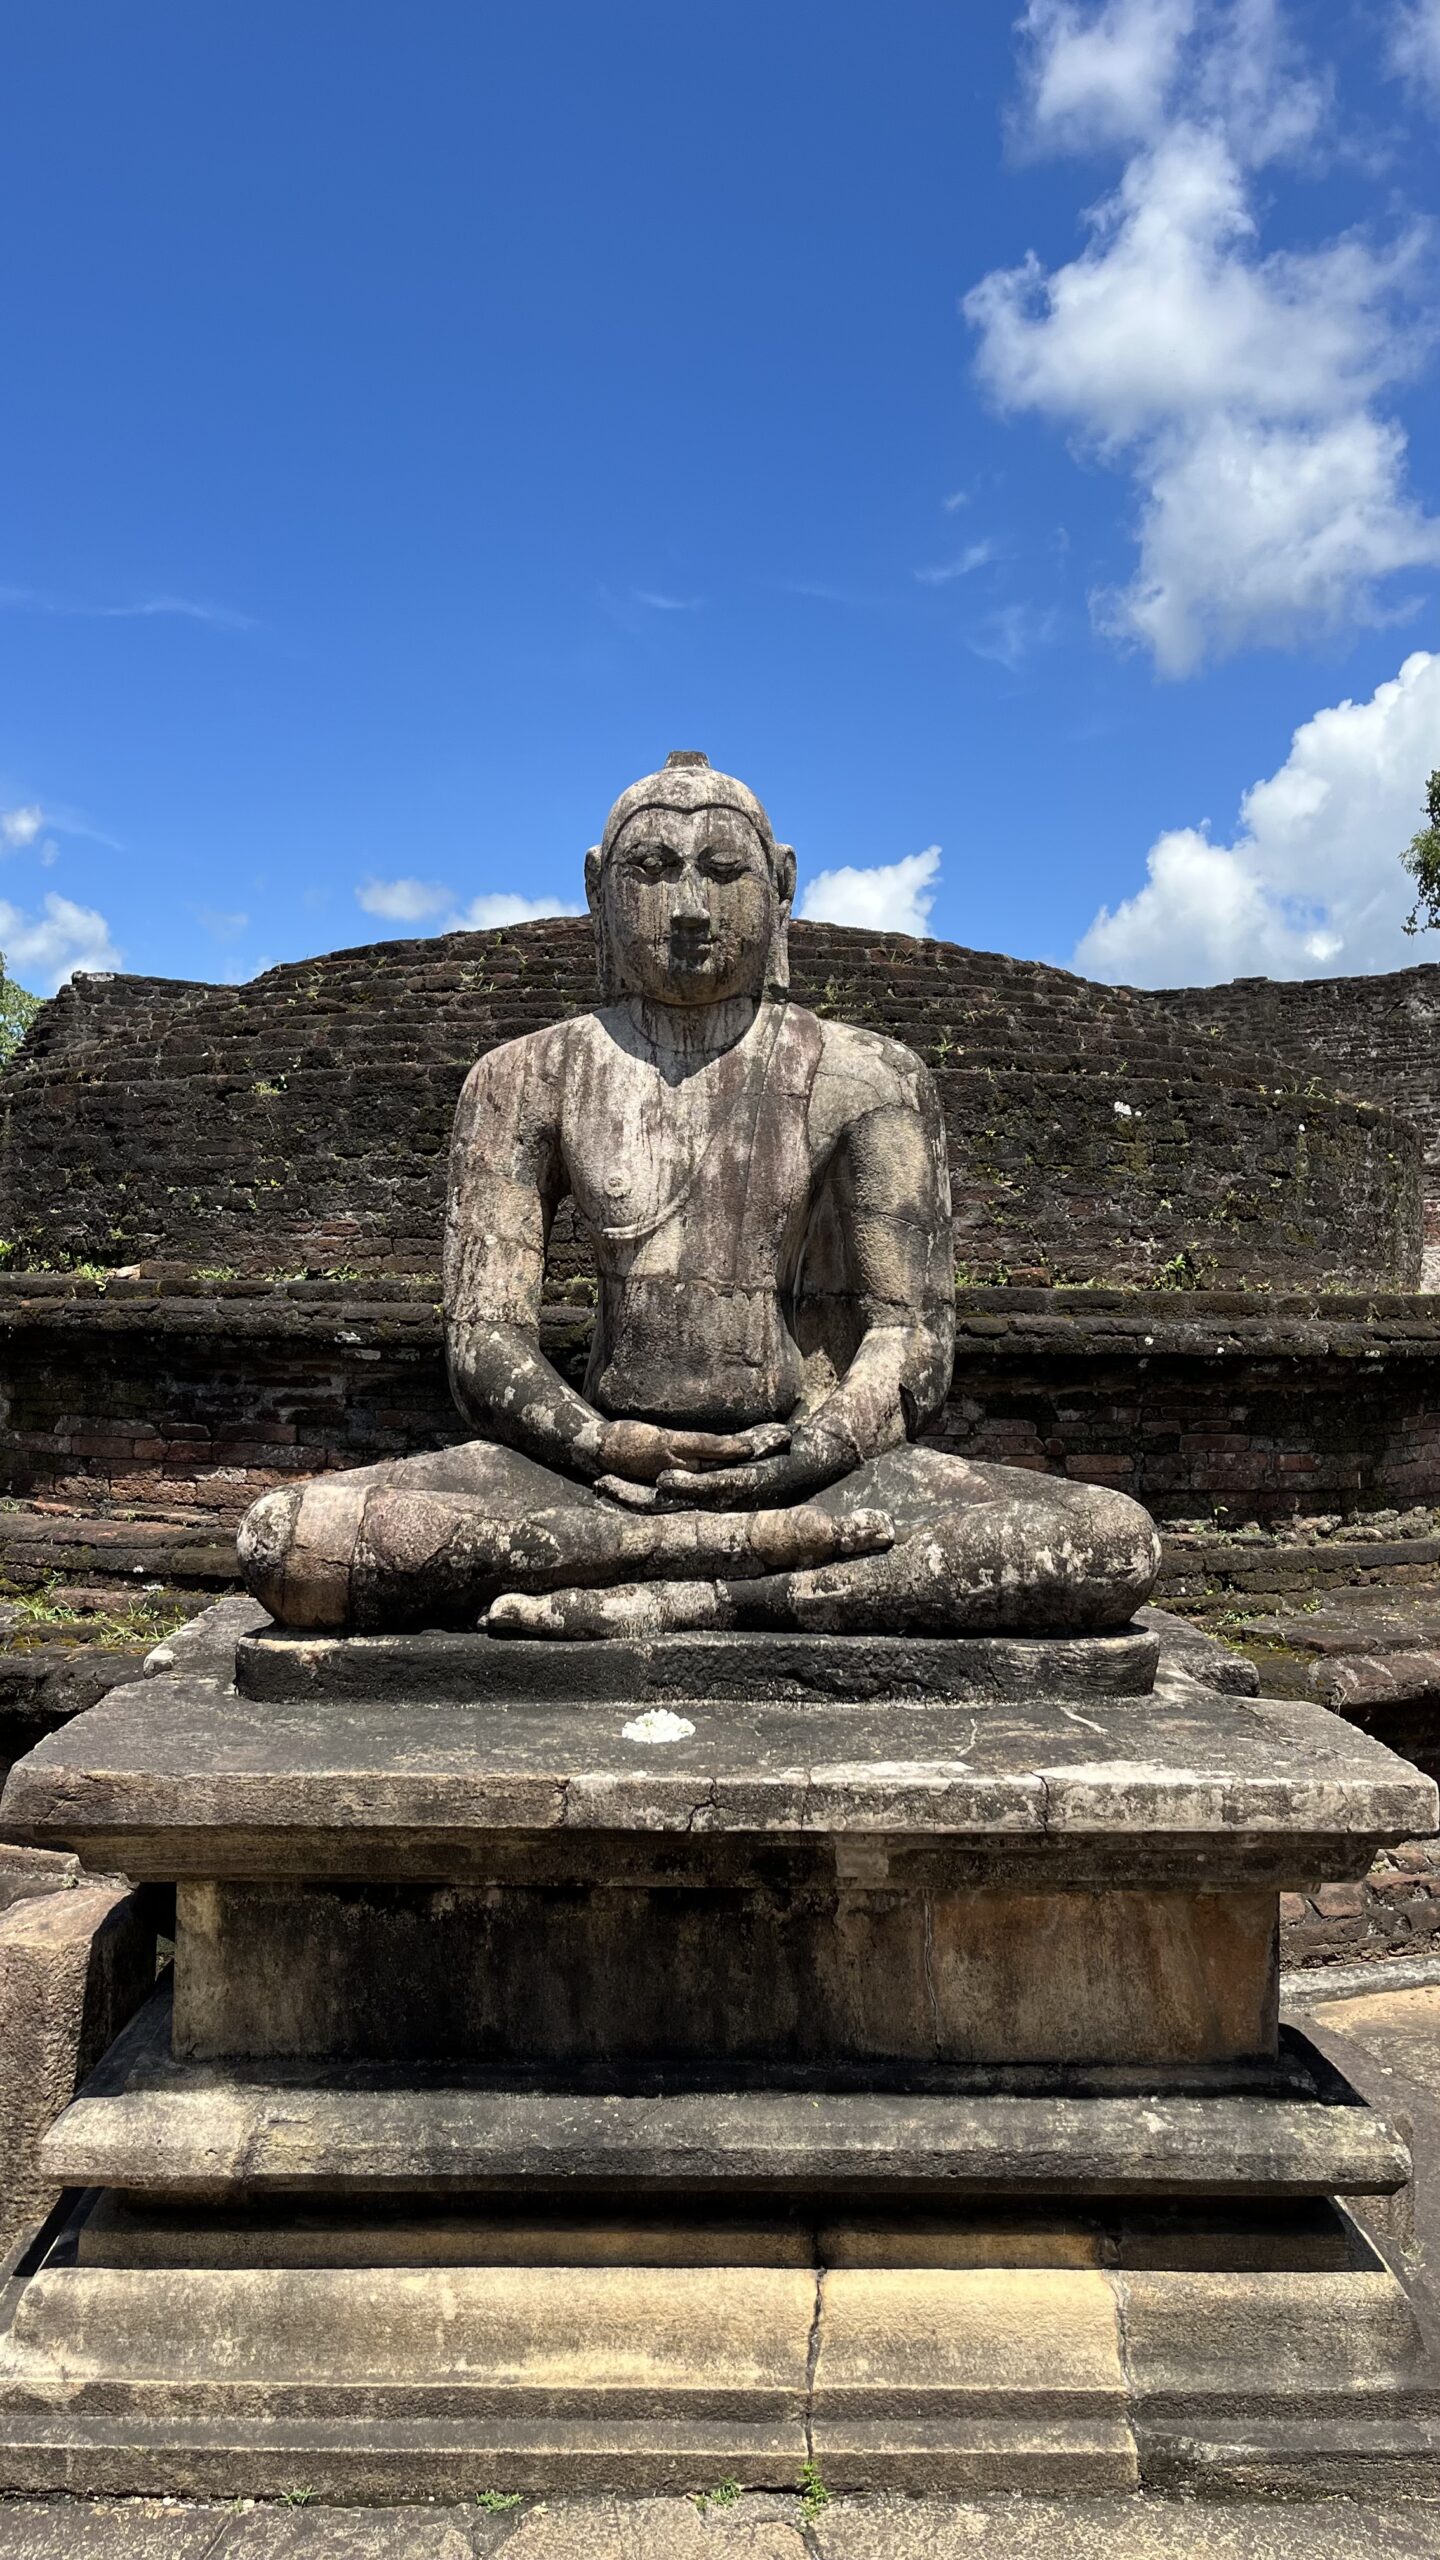 Voyager au Sri Lanka avec les enfants - La Famille Nomade Blog voyage
Polonnaruwa